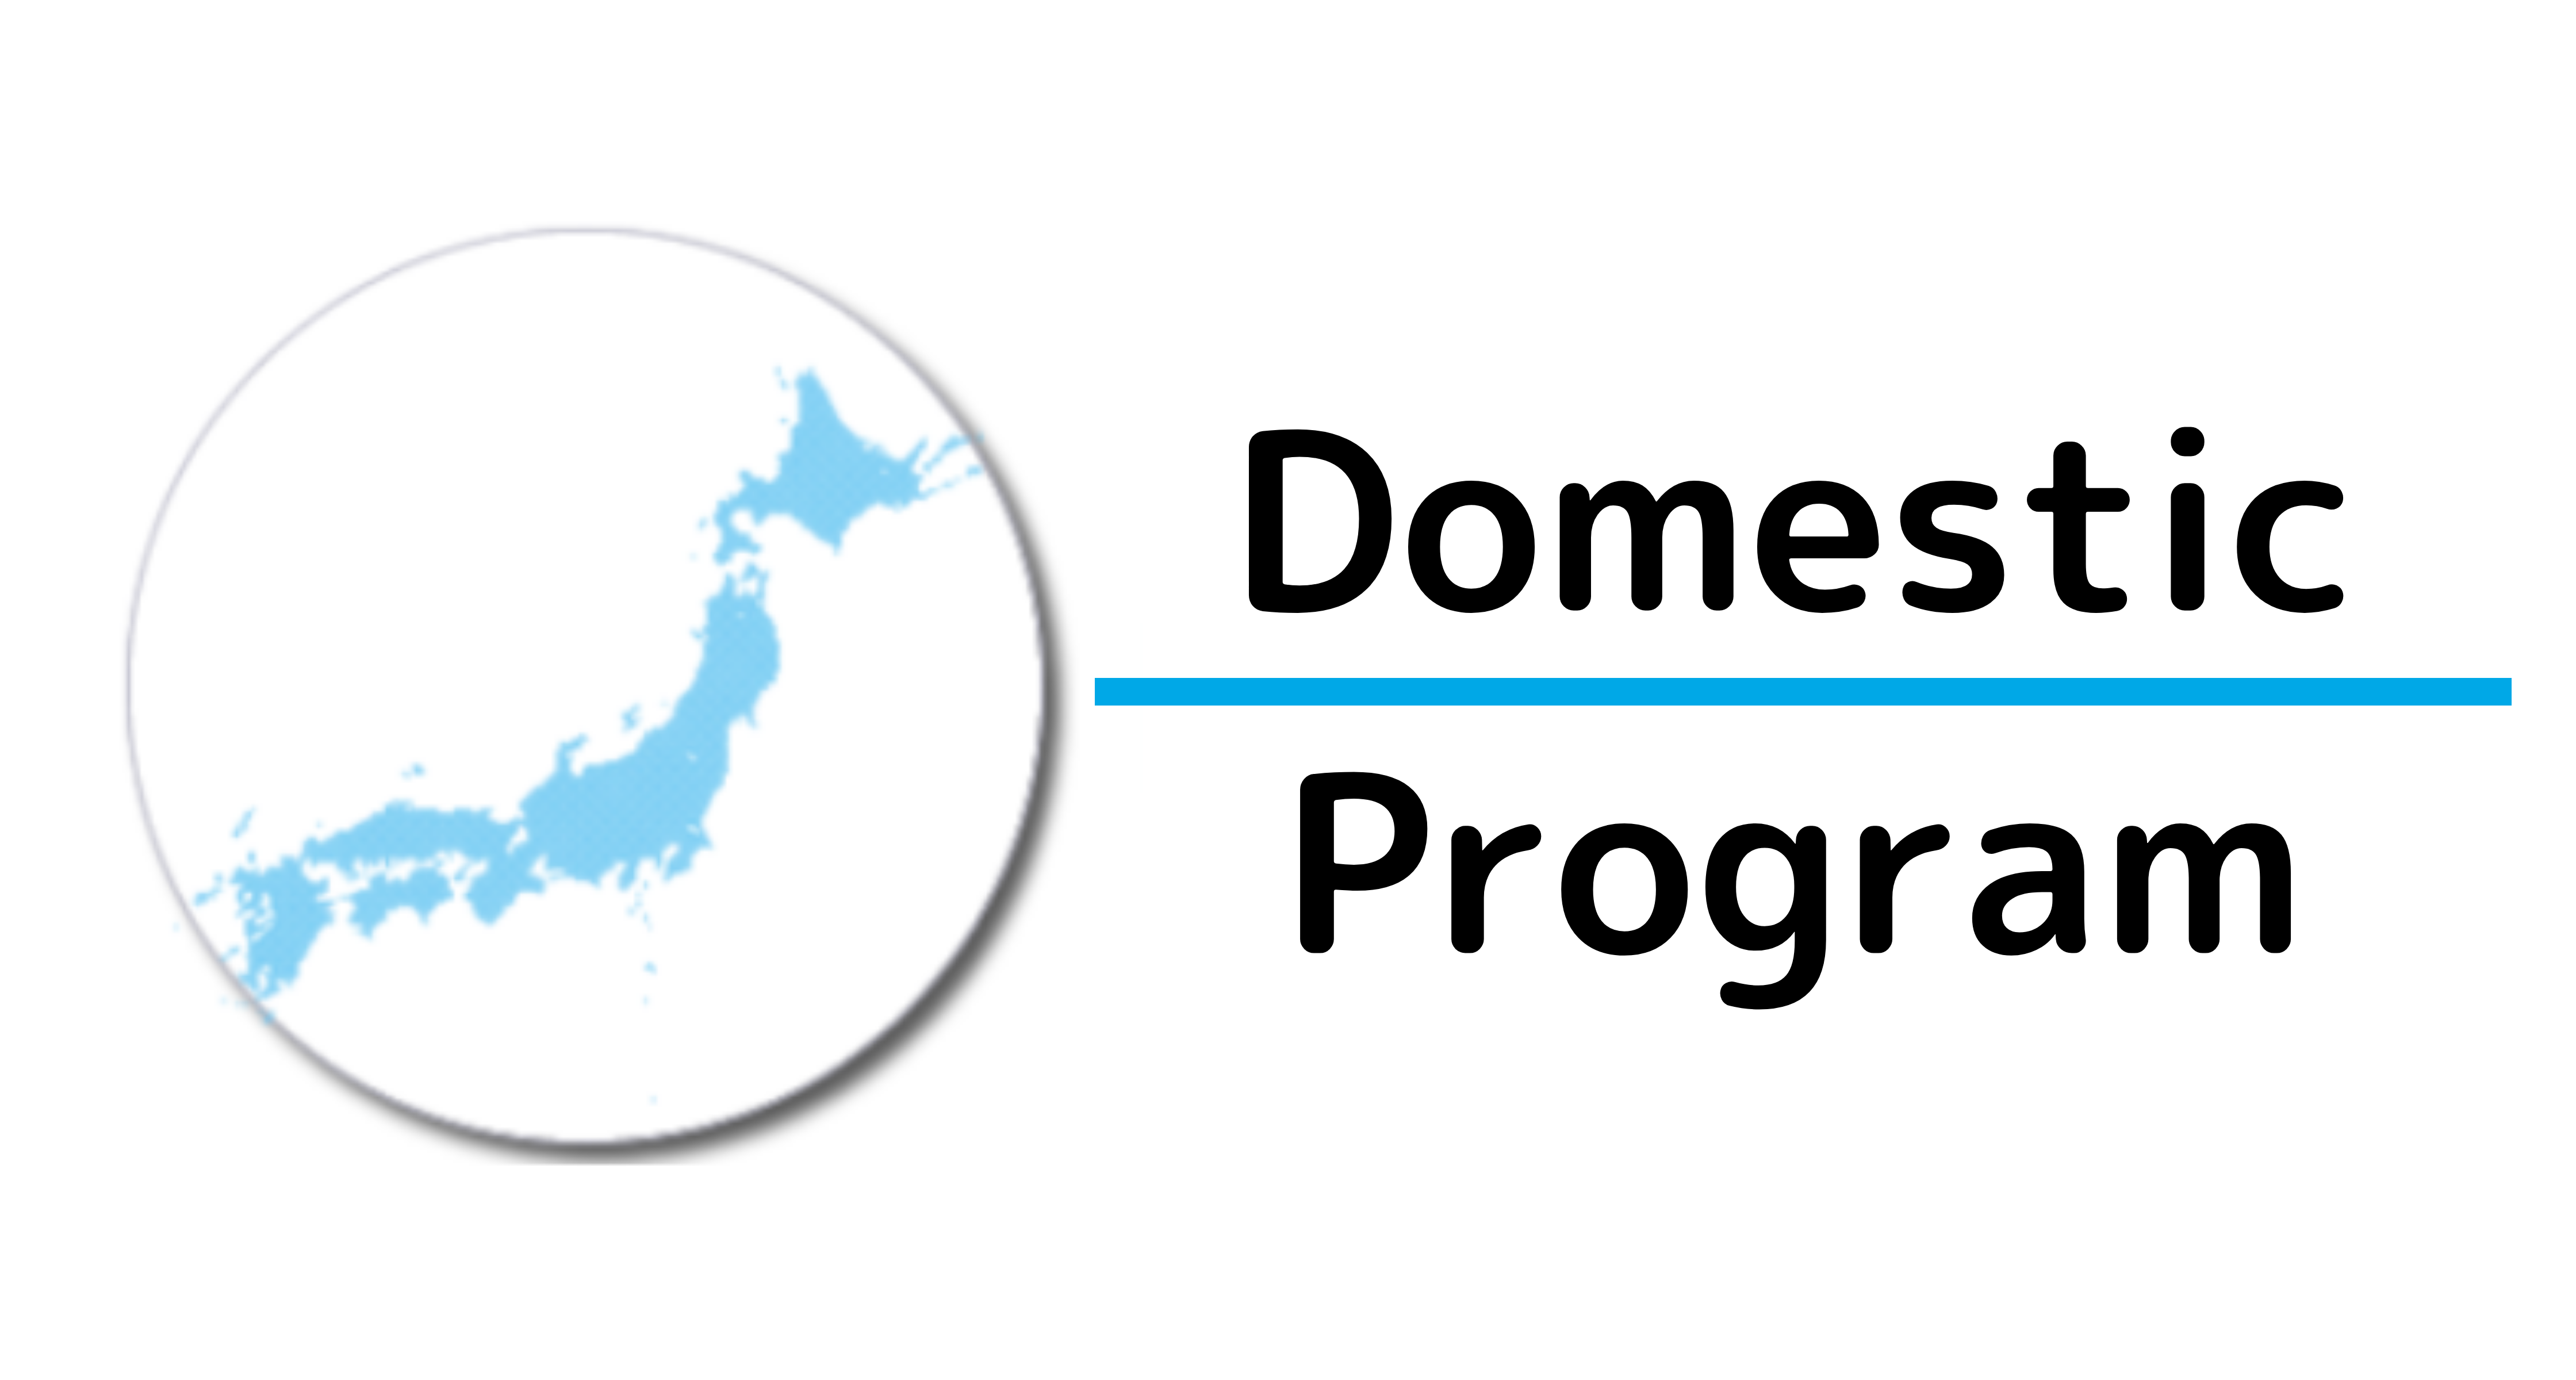 Domestic program